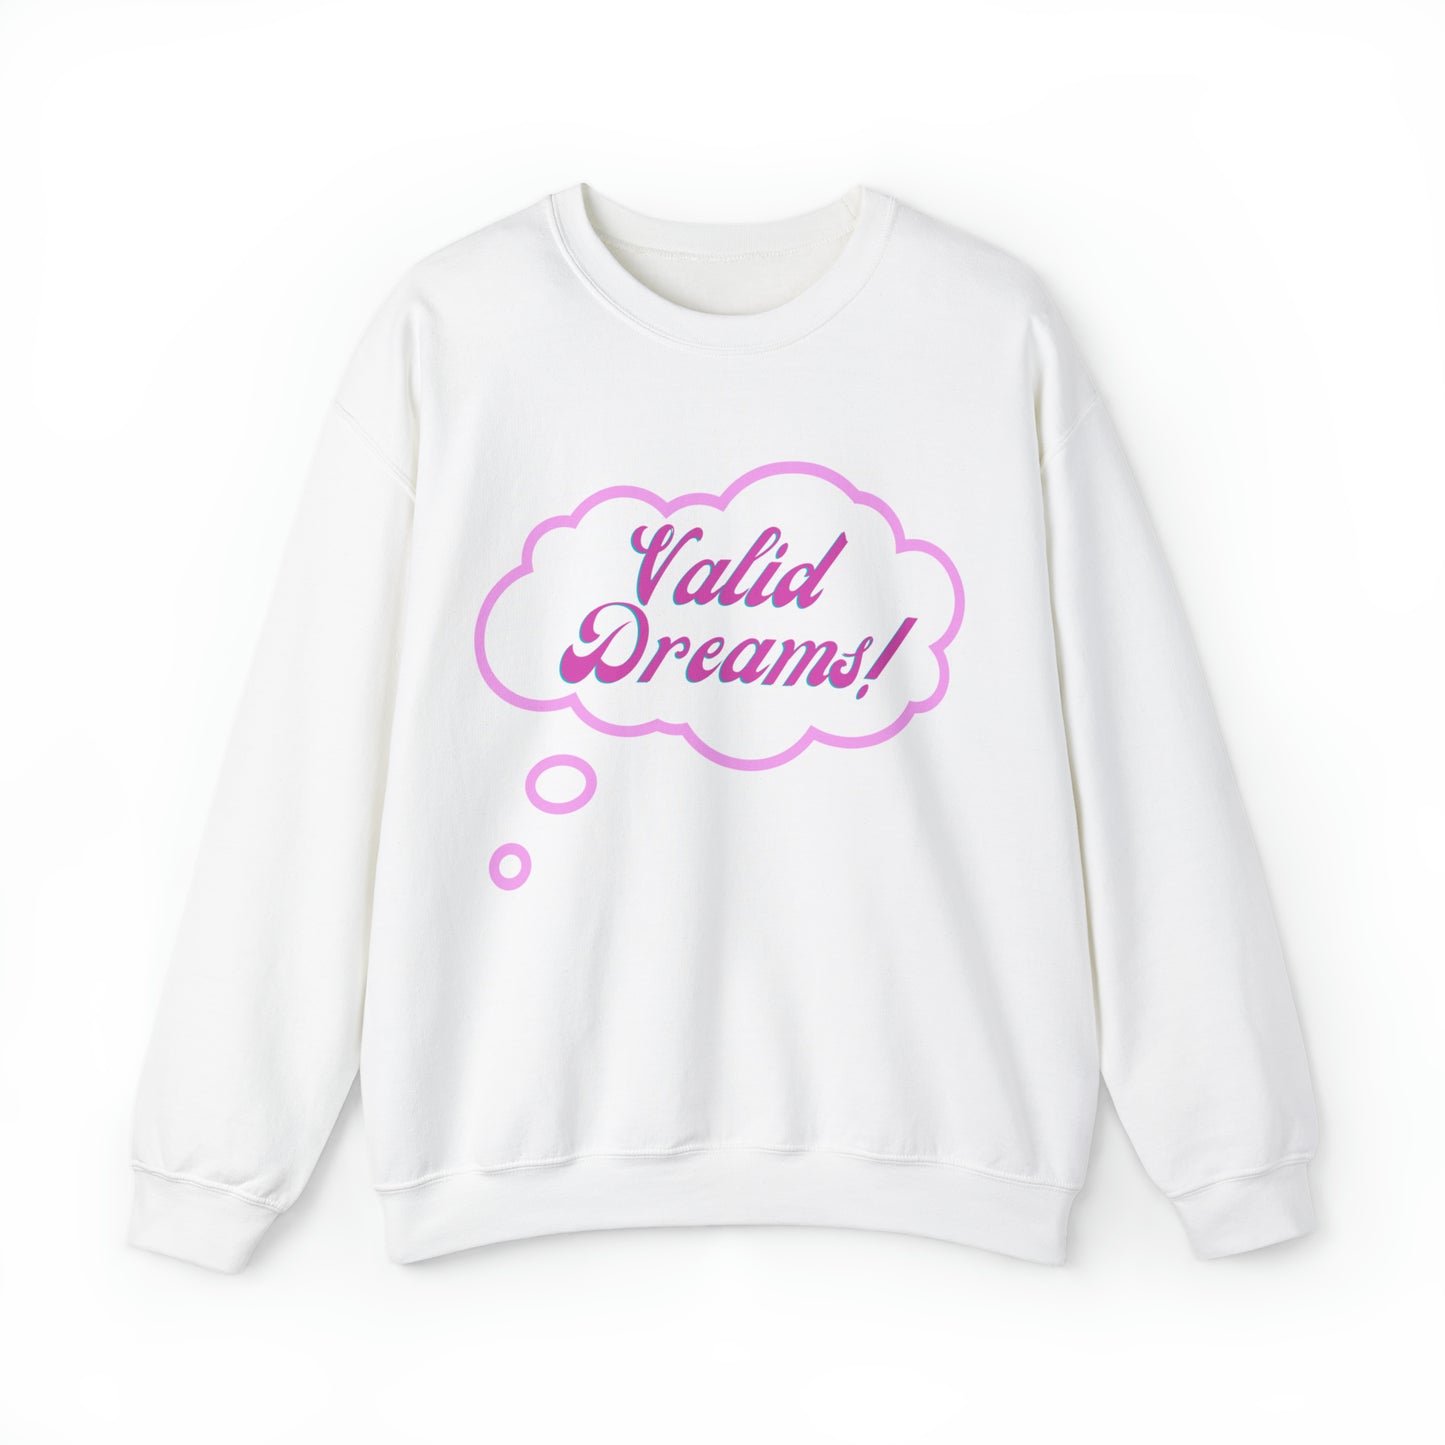 Valid Dreams Statement Sweatshirt Gift